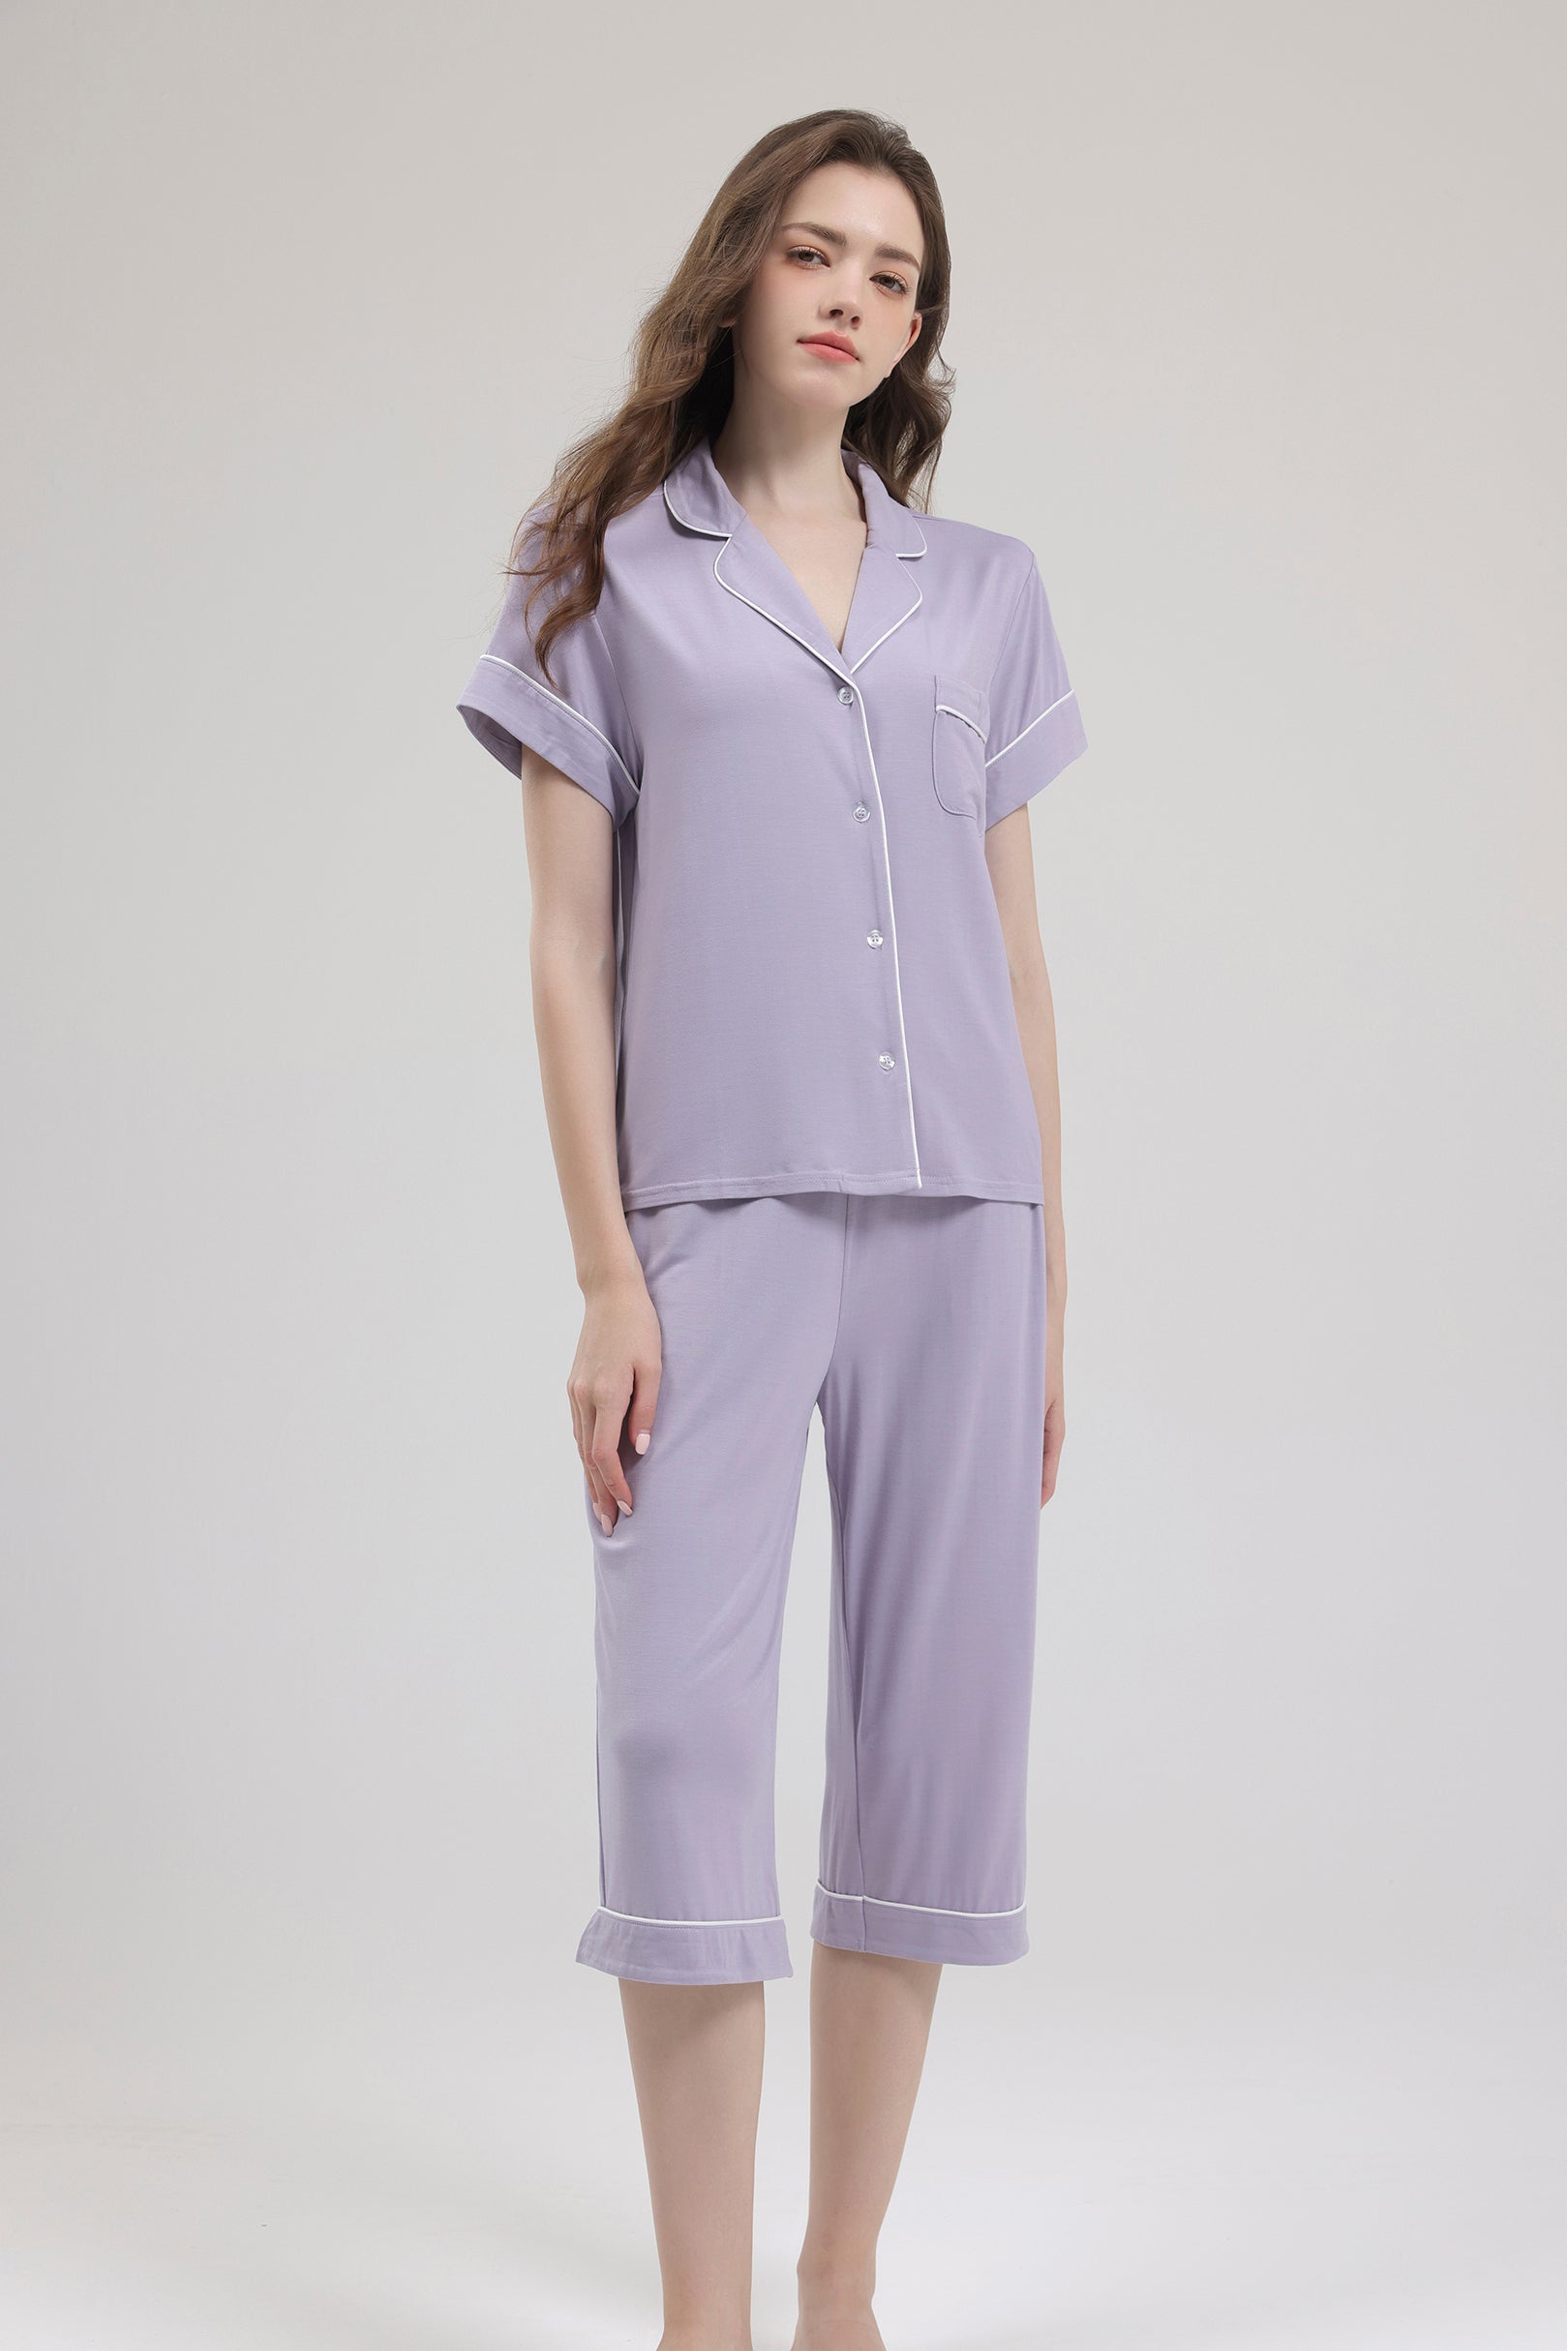 Signature Cropped Pyjamas Set in Lilac Grey